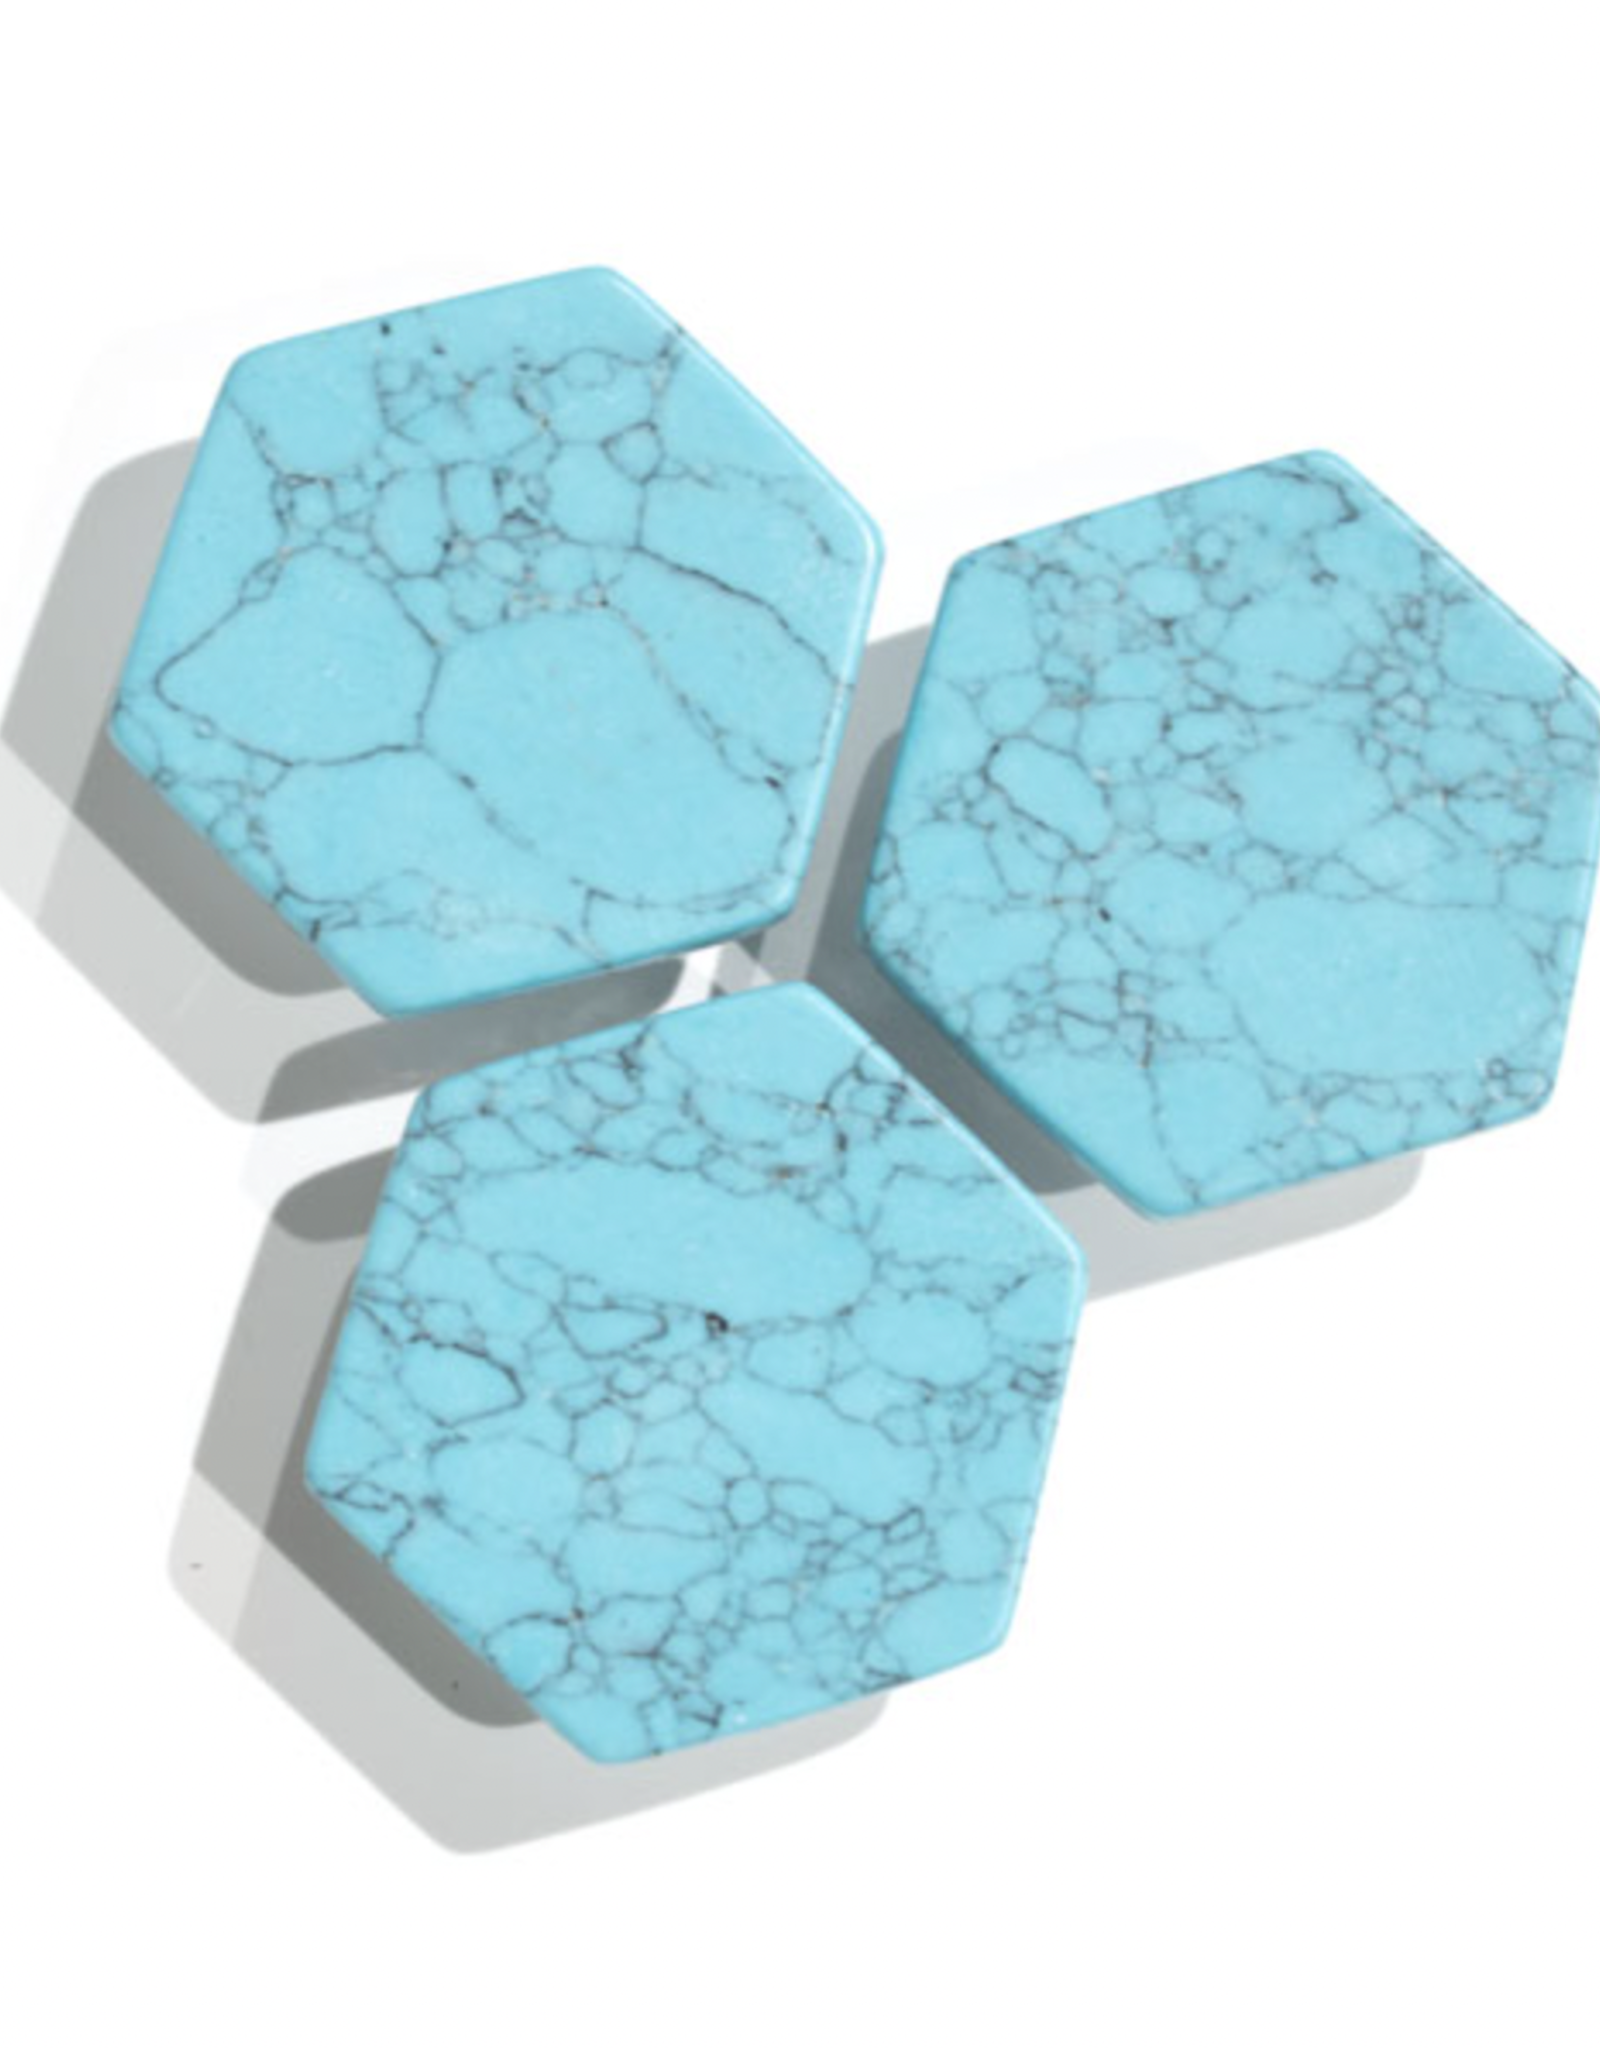 Phone Grip - Turquoise Howlite, Hexagon Shape